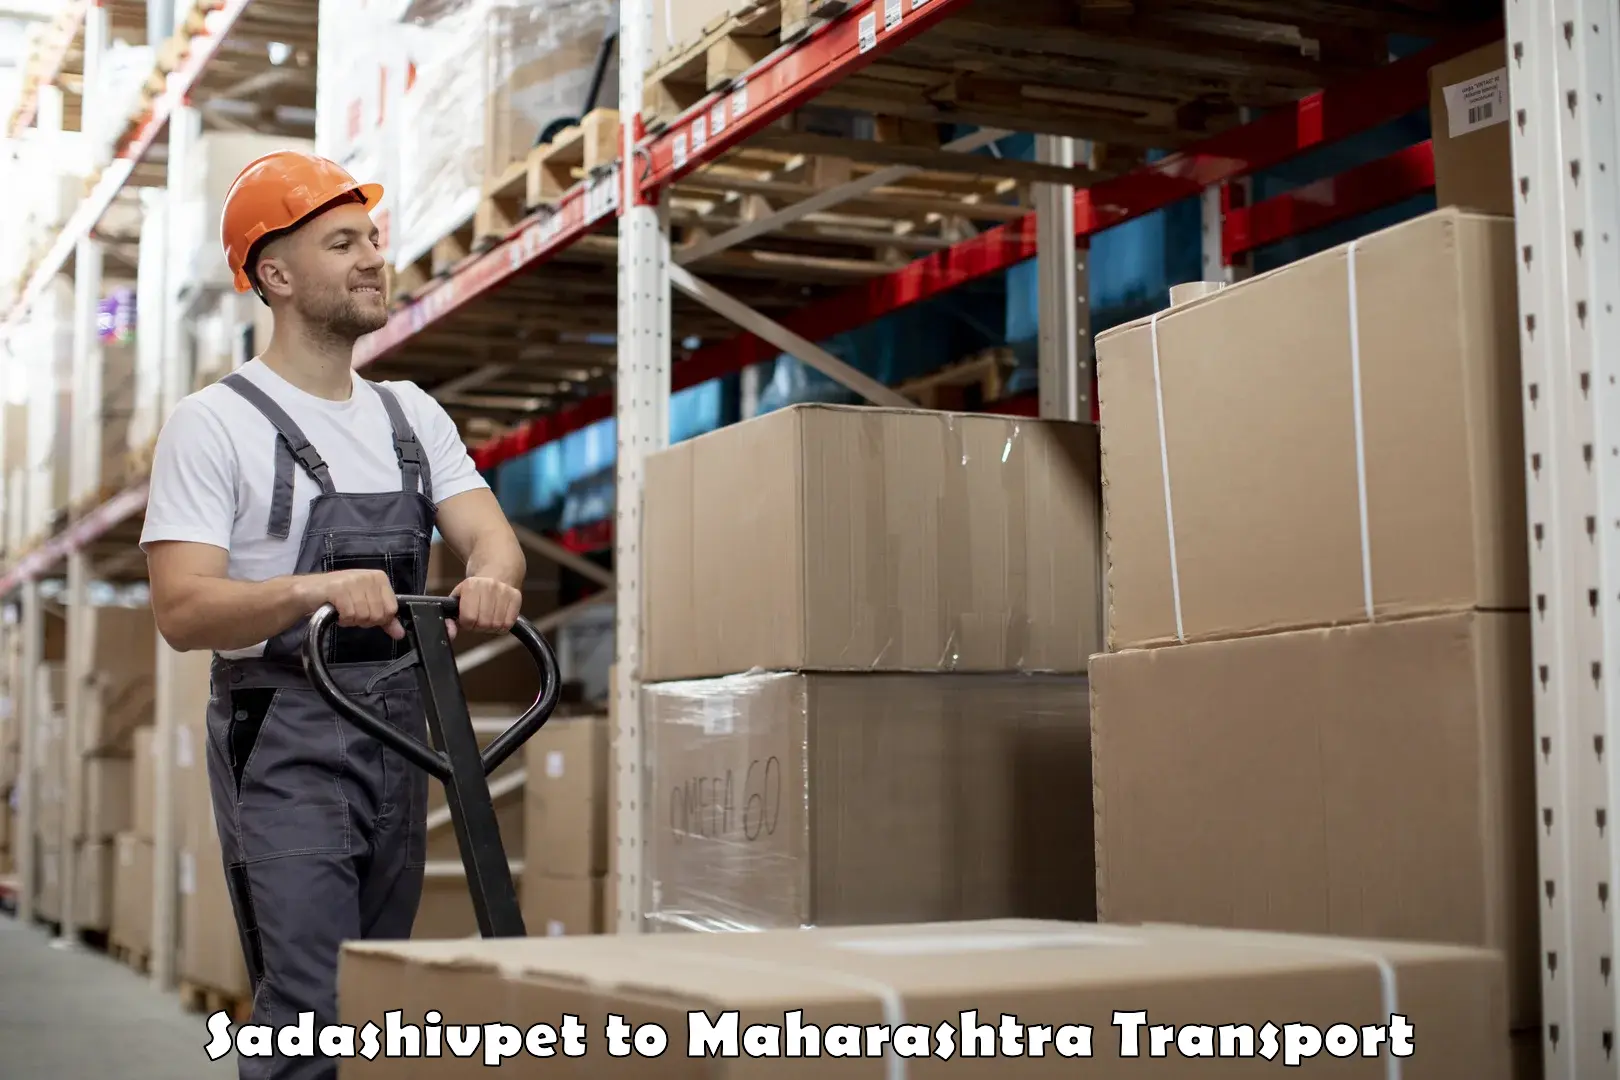 Truck transport companies in India Sadashivpet to Ahmednagar